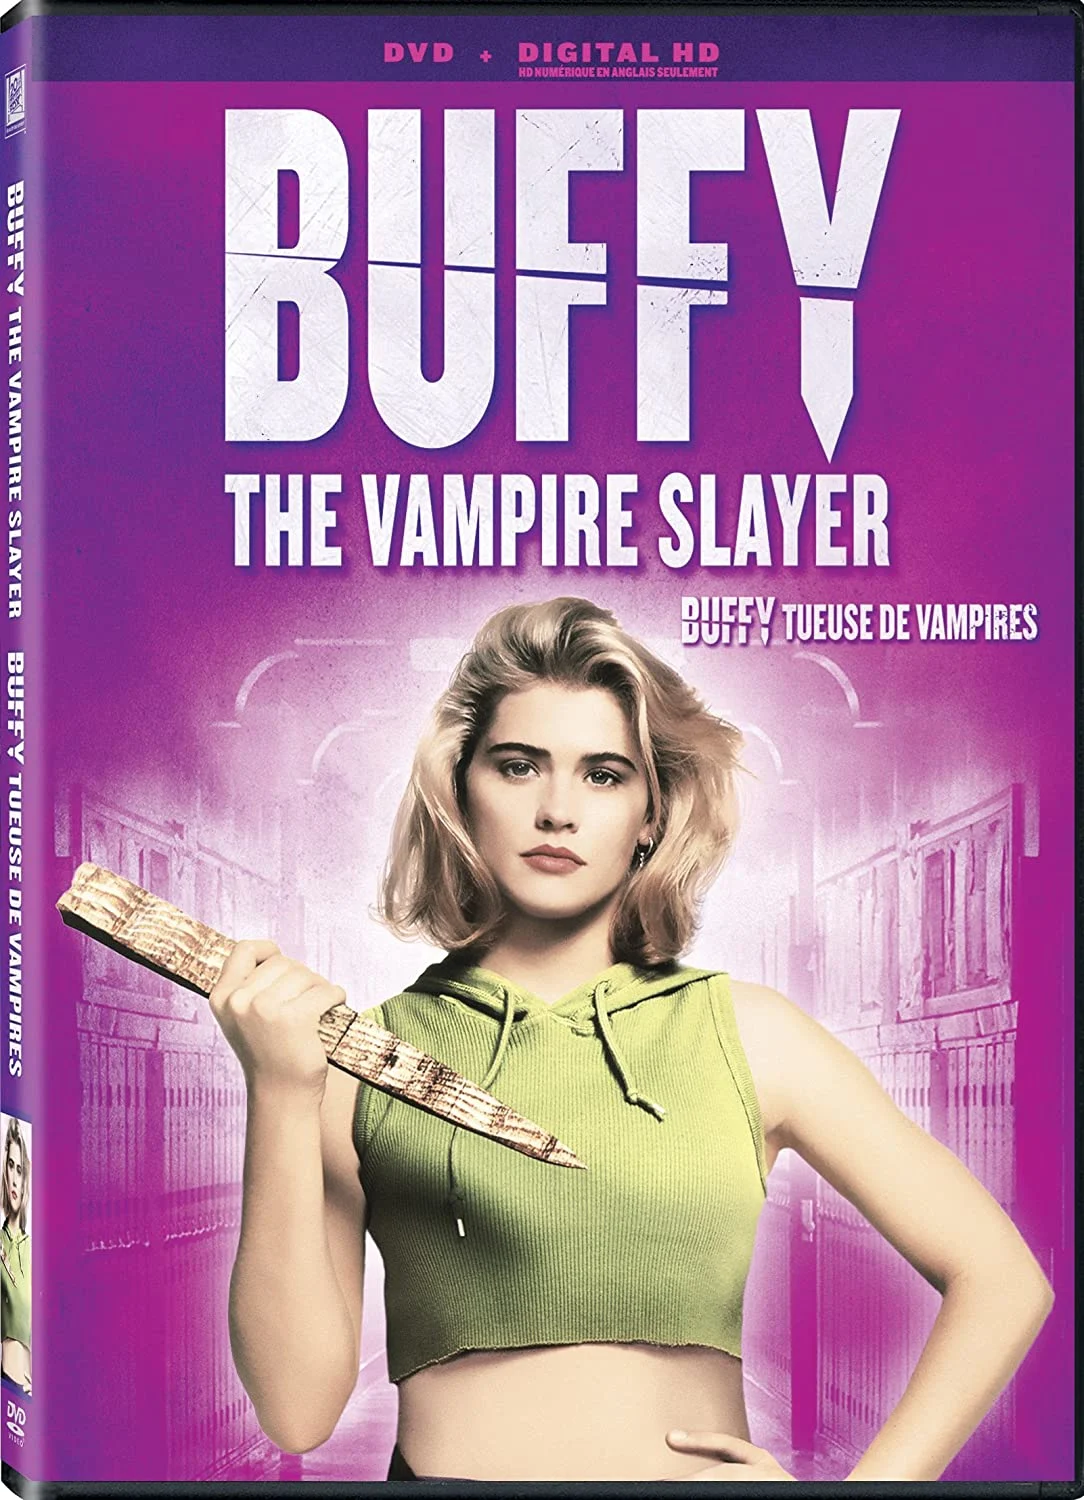 Buffy The Vampire Slayer (DVD) on MovieShack